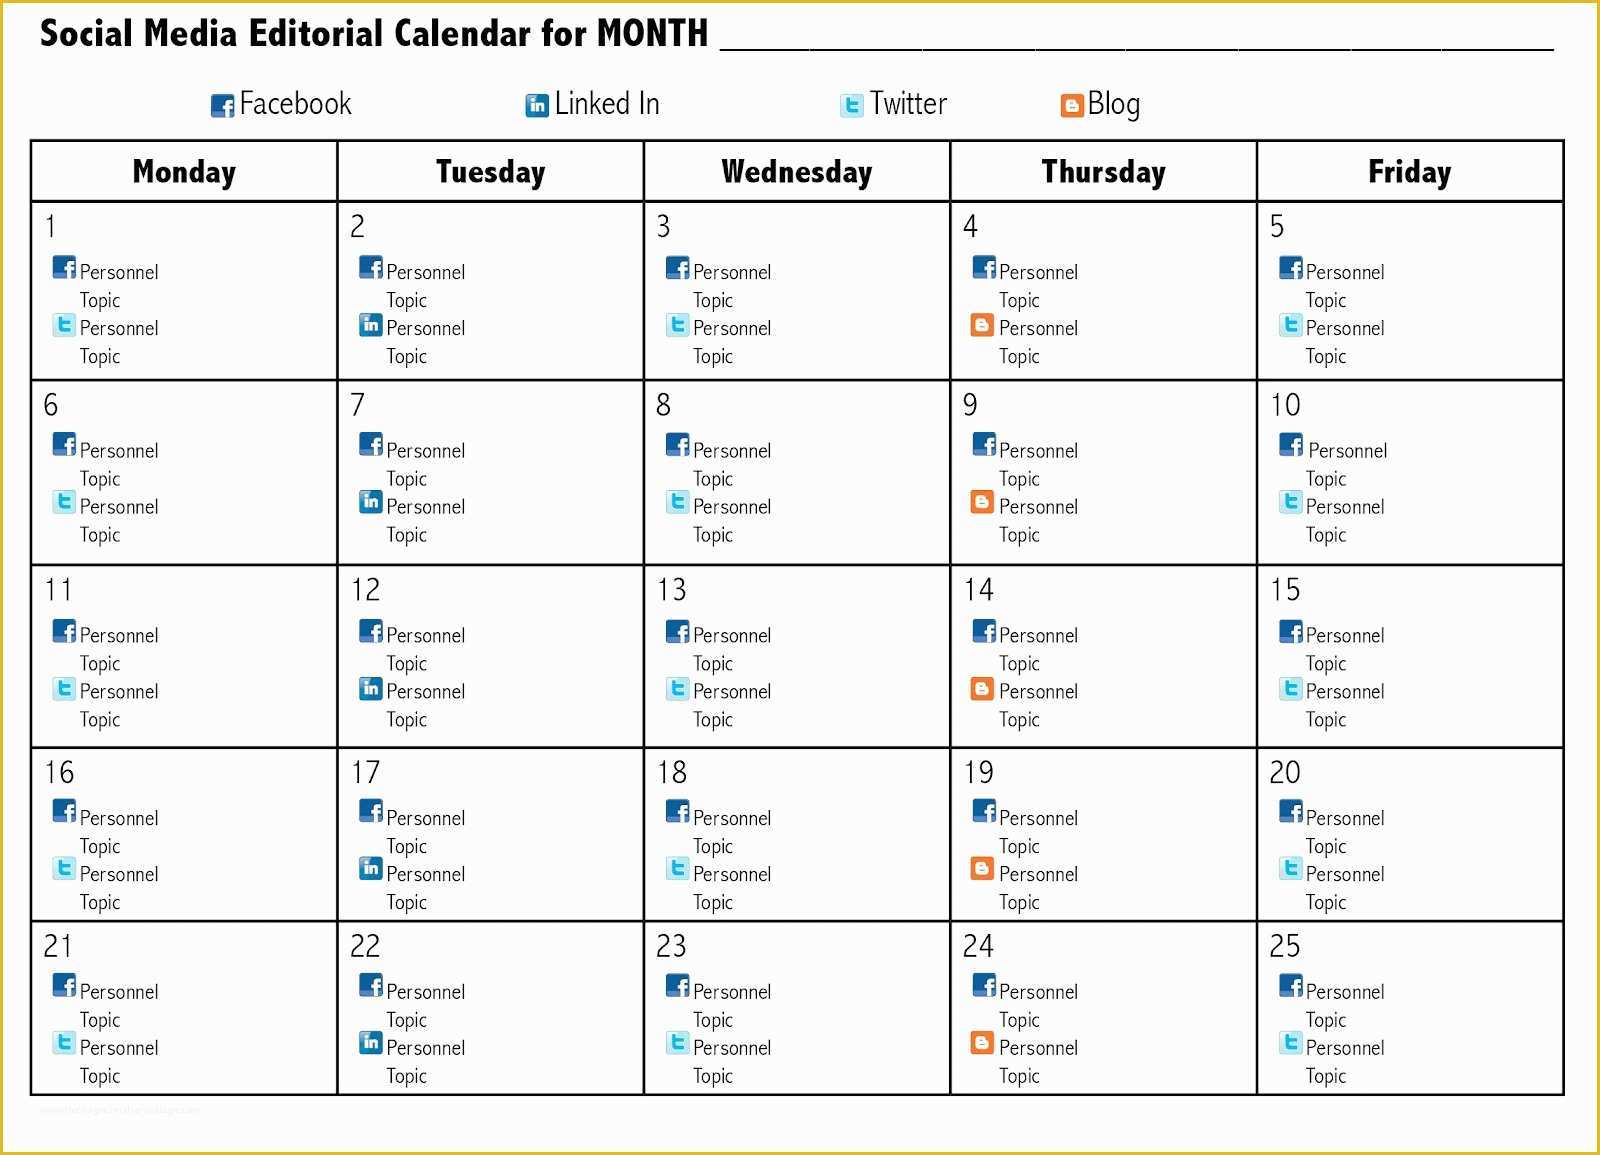 Content Calendar Template Free Of social Media Calendar Excel